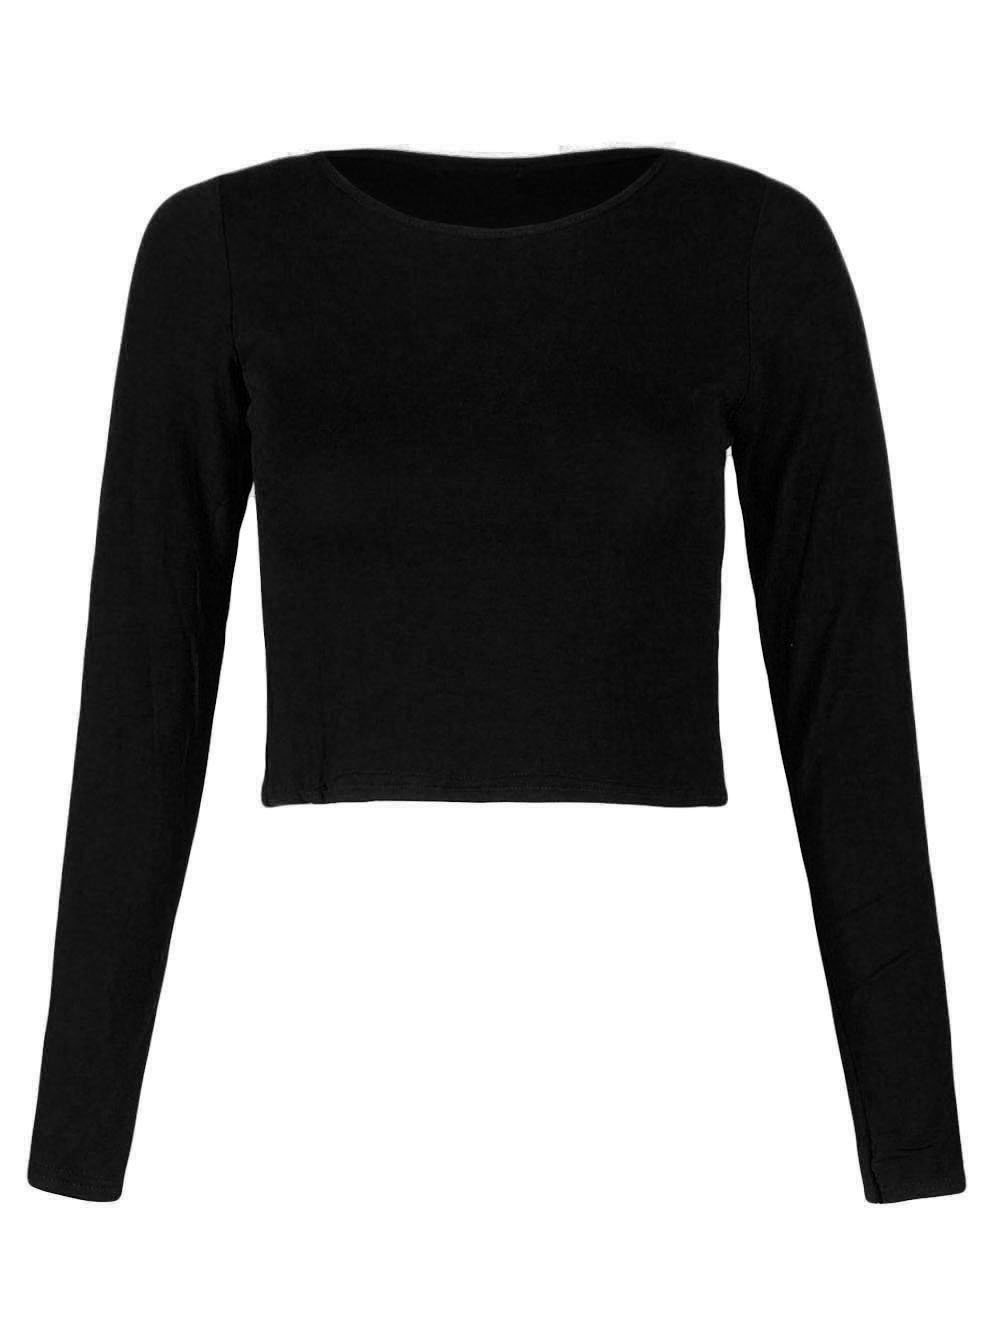 Black Long Sleeve Plain Crop Tshirt Top